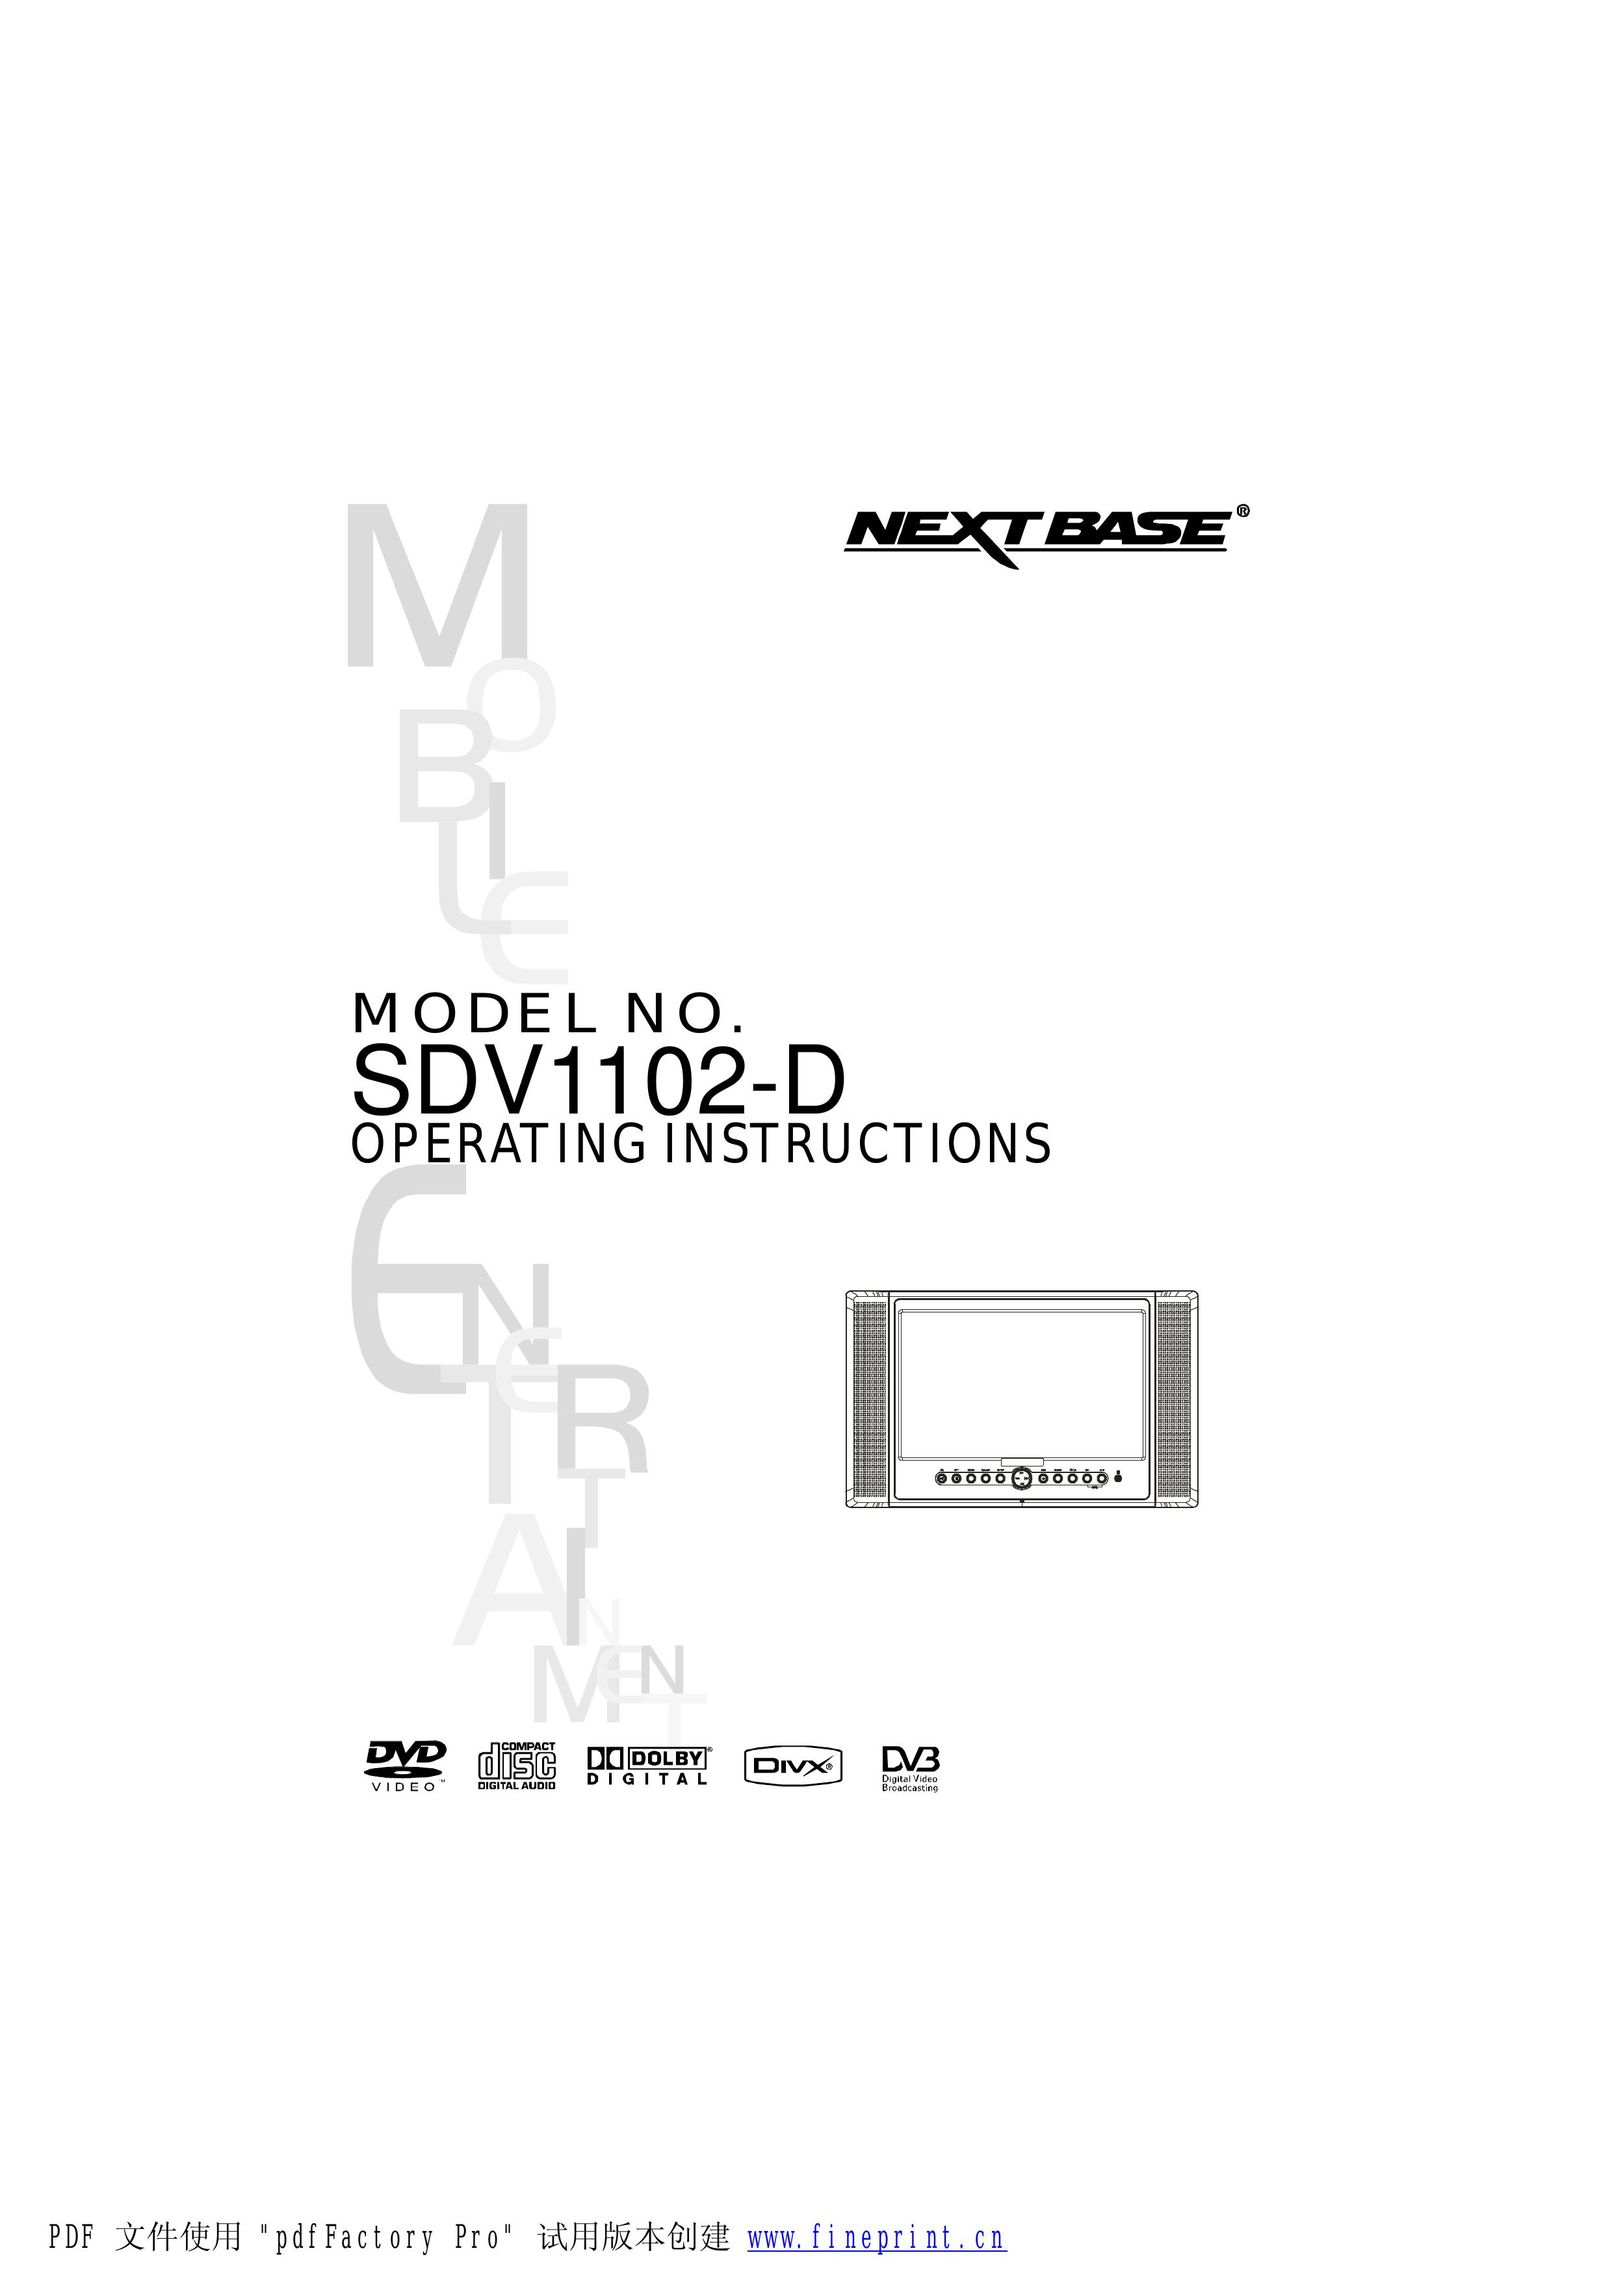 NextBase SDV1102-D Portable DVD Player User Manual